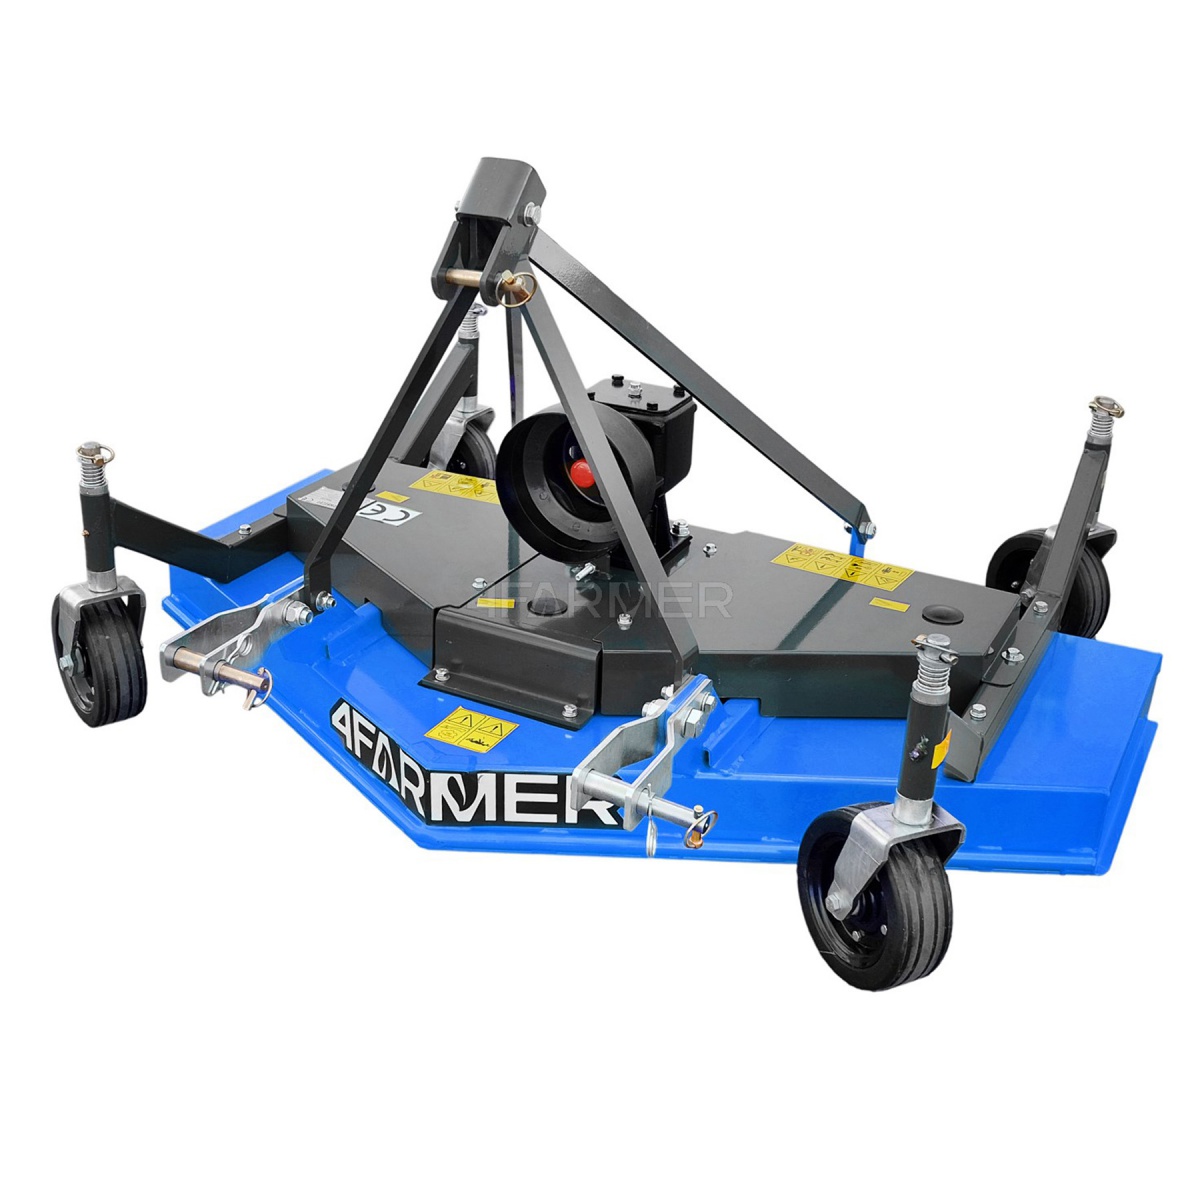 4farmer - Maintenance mower FMK 180 4FARMER - blue